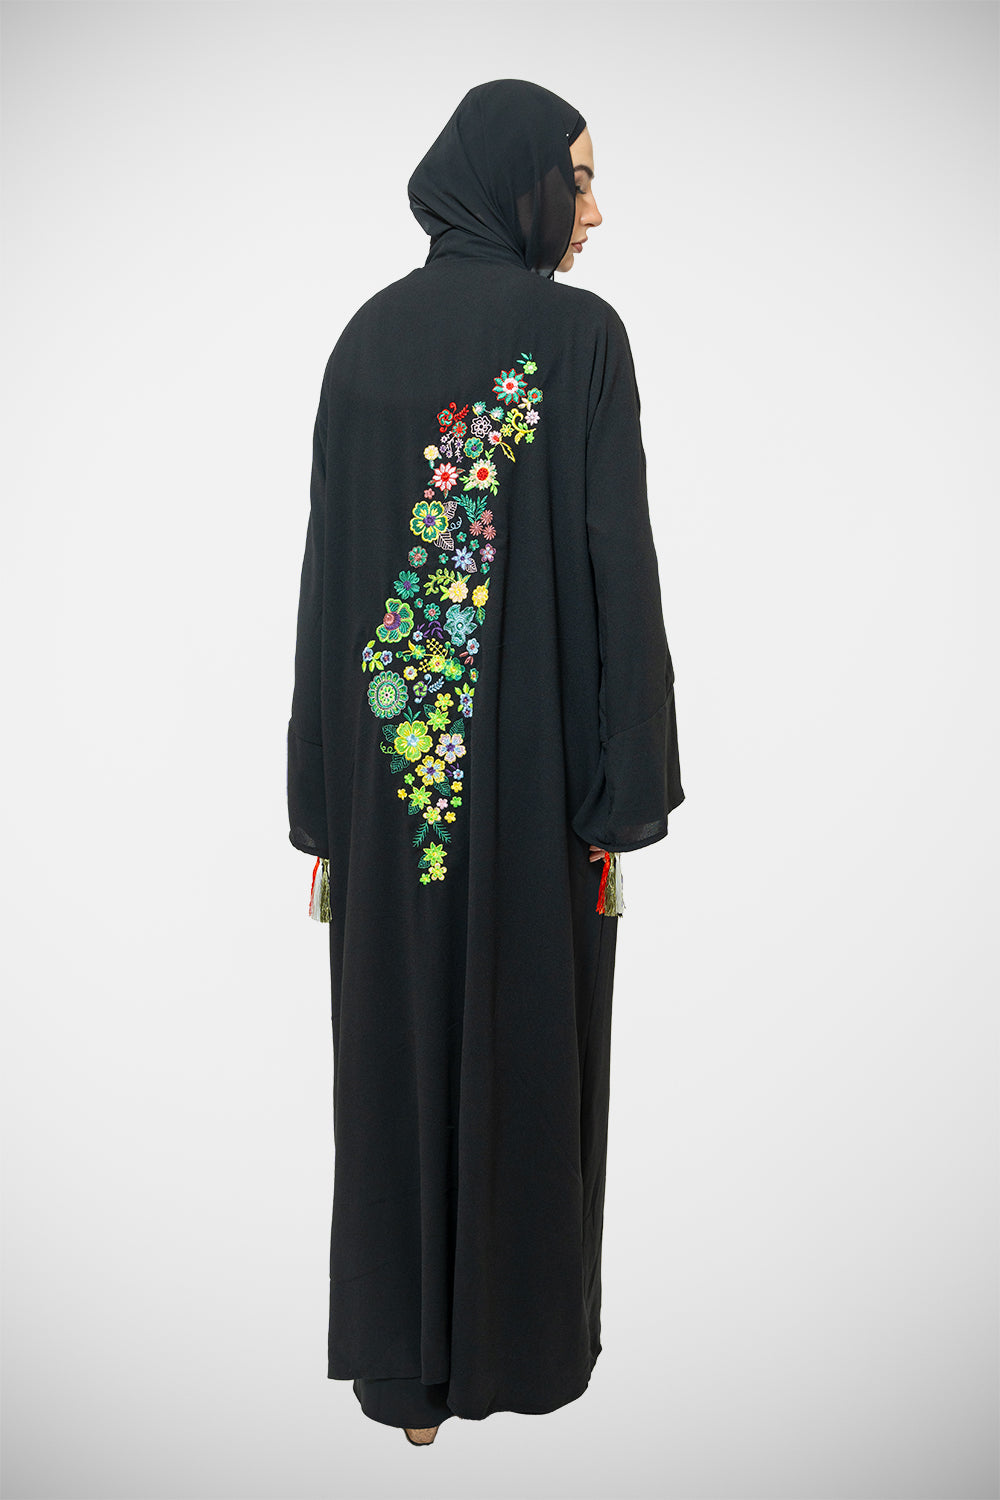 Palestinian Floral Heritage Modest Open Abaya